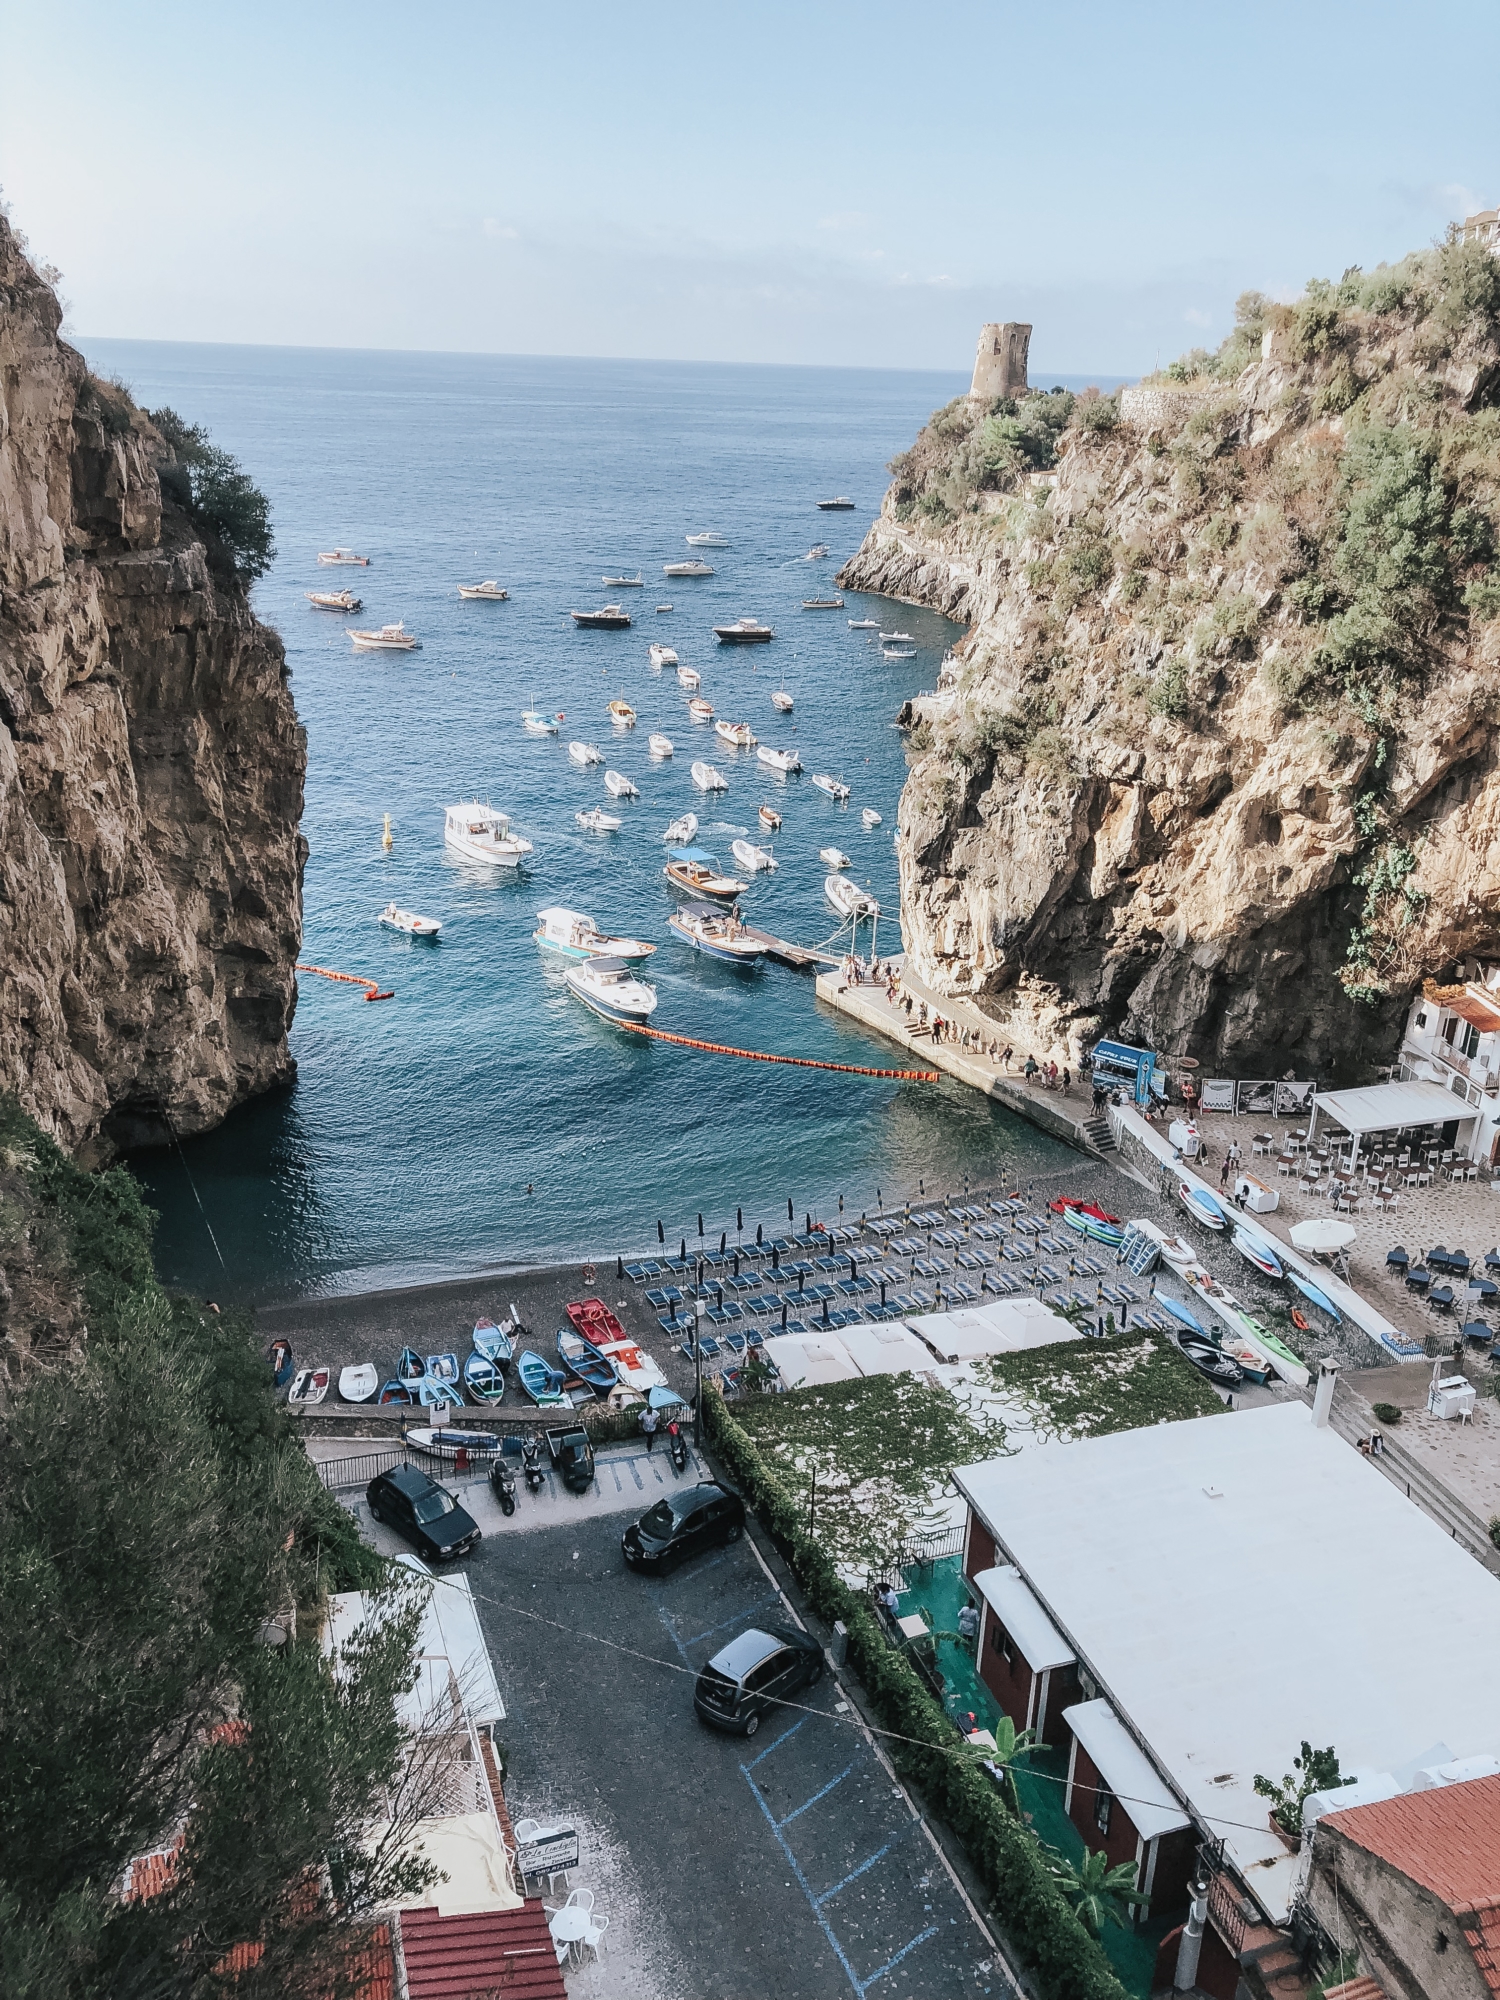 Double Shot of Sass | Europe Trip 2018: Praiano, Positano, & Capri